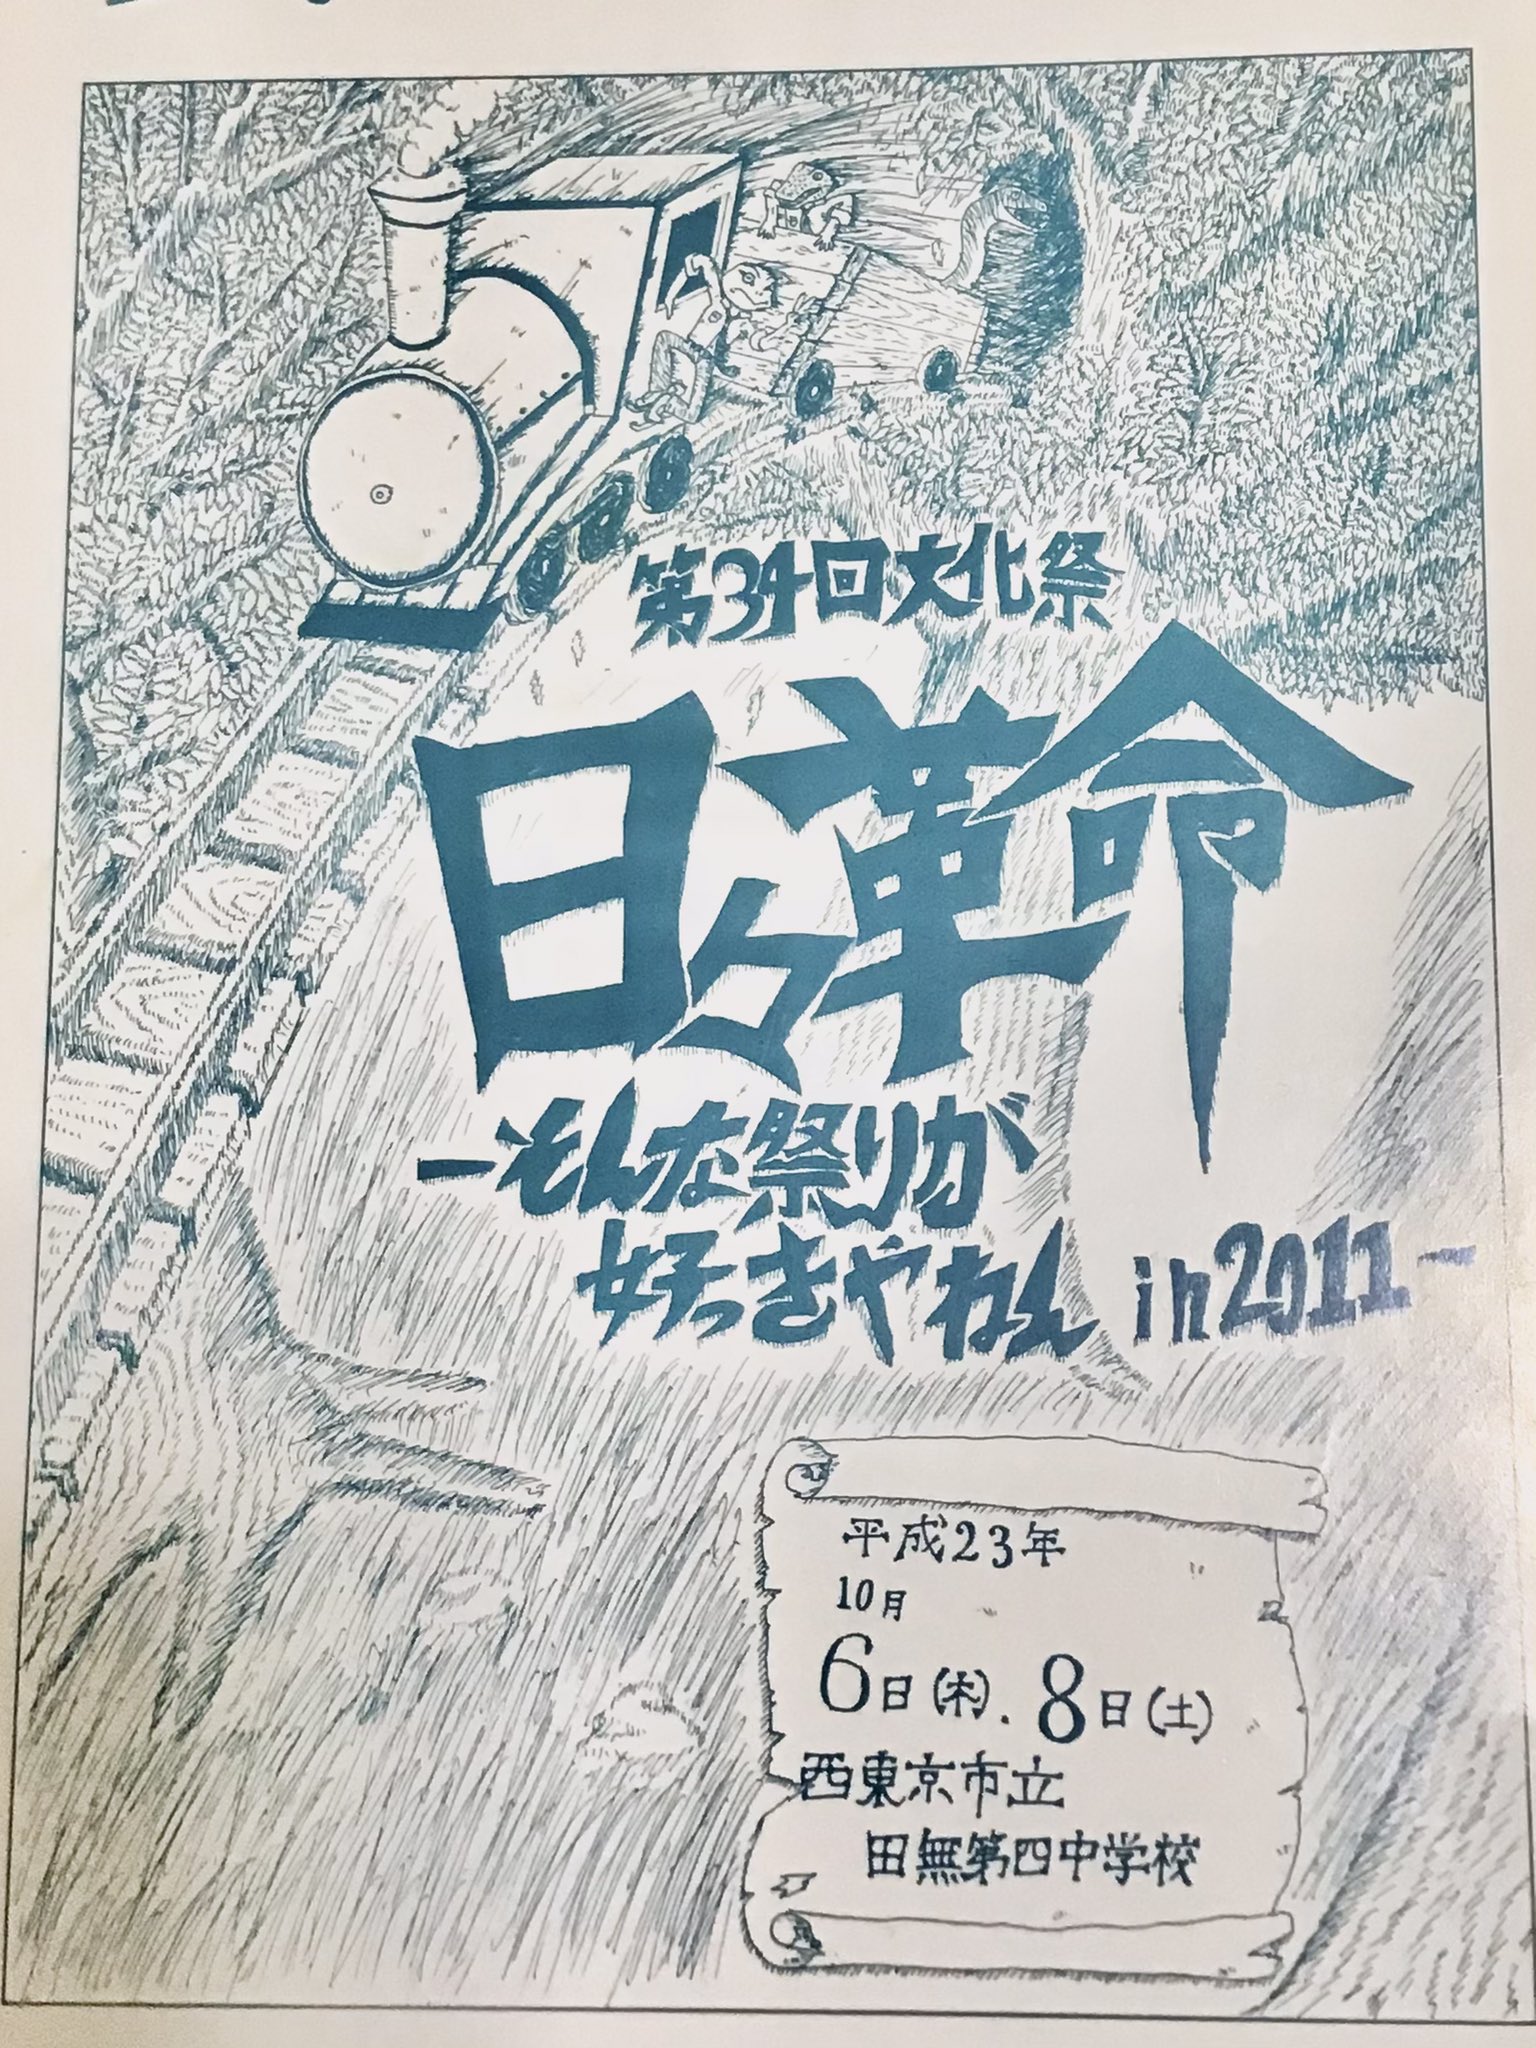 Ryotaro Okabe 中2の時に文化祭でパンフの表紙絵に選ばれたイラスト 久々に発見 T Co Rdfsh4mstq Twitter